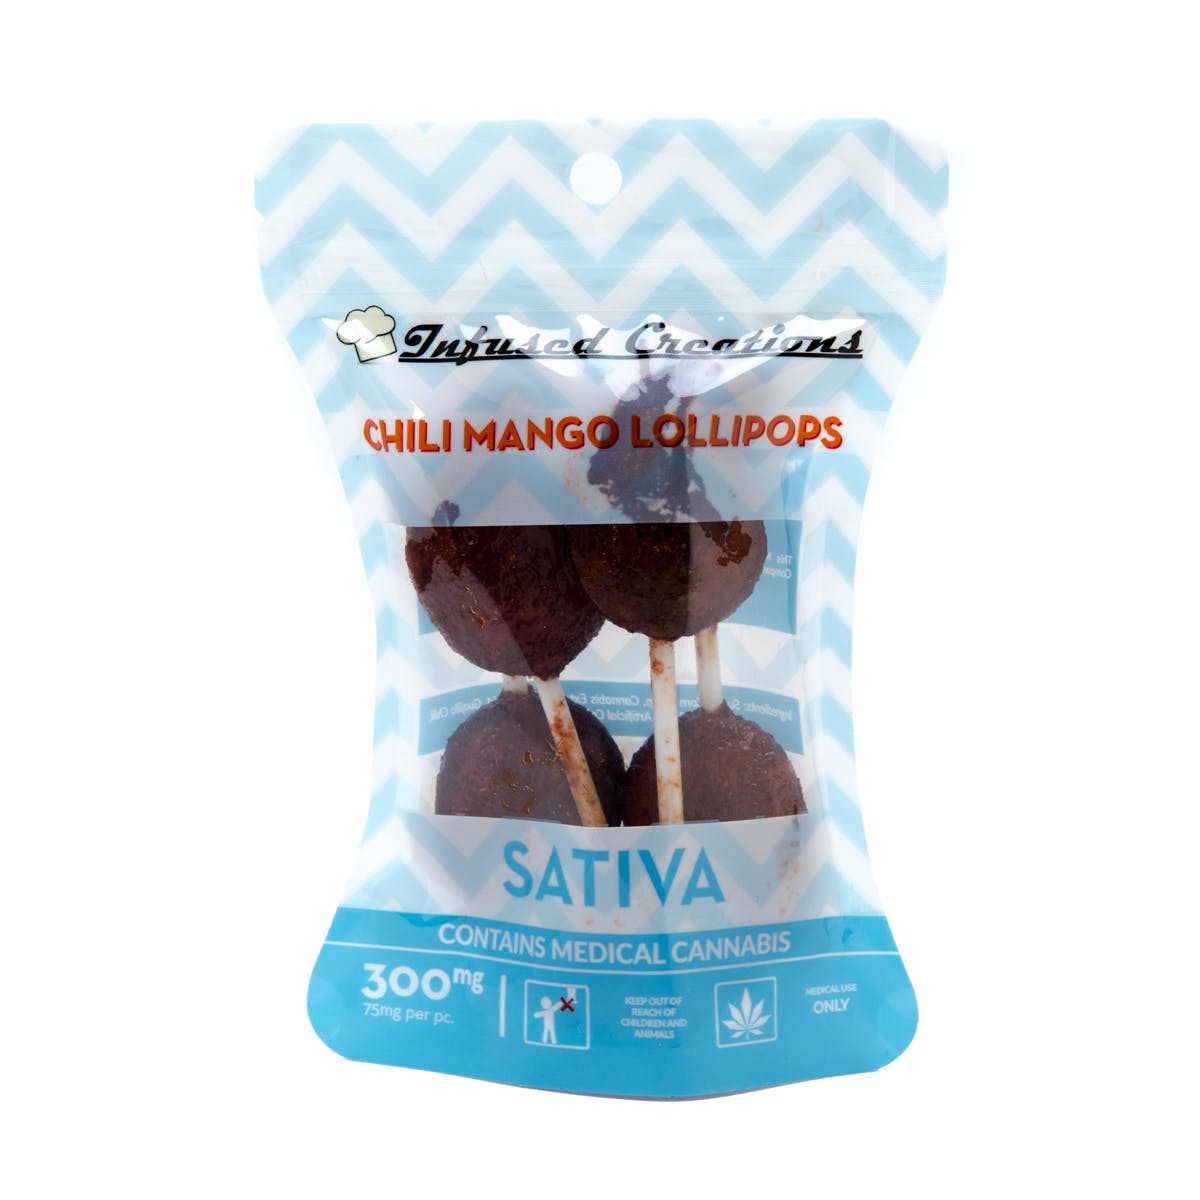 Chili Mango Lollipops Sativa, 300mg